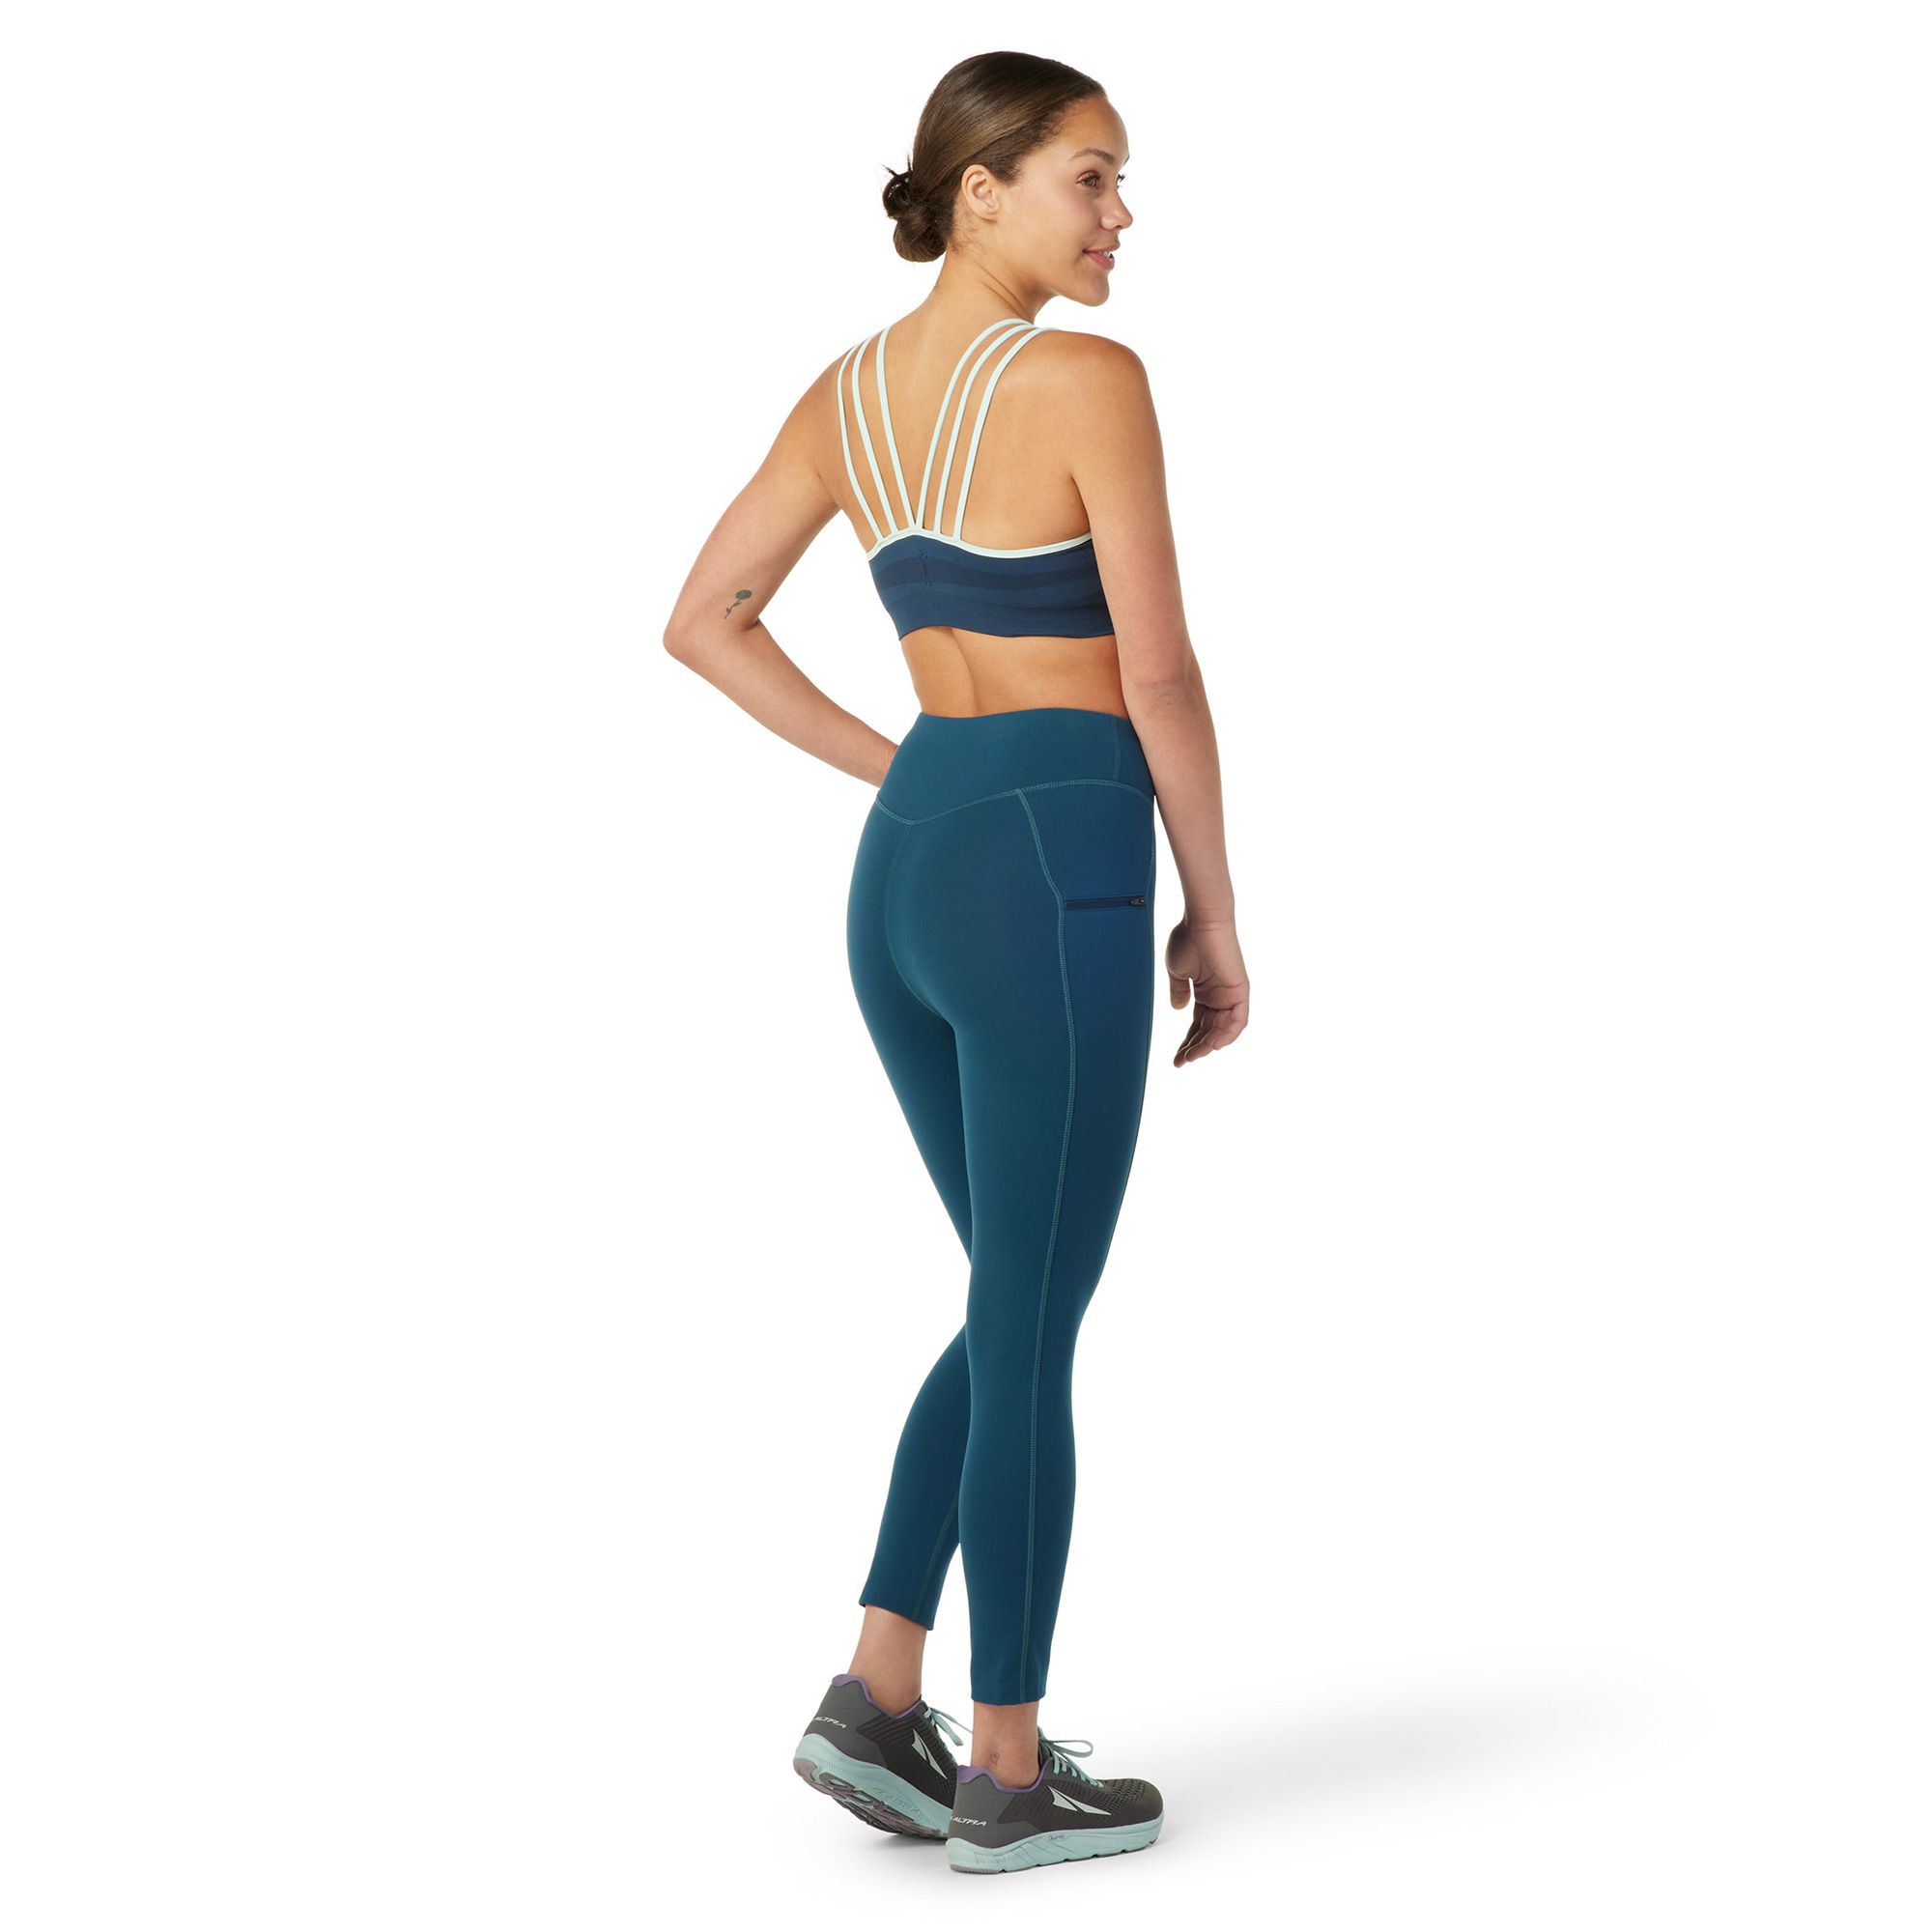 Womens Sports and Fitness Leggings - S M L XL Yoga Pants - Vibrant